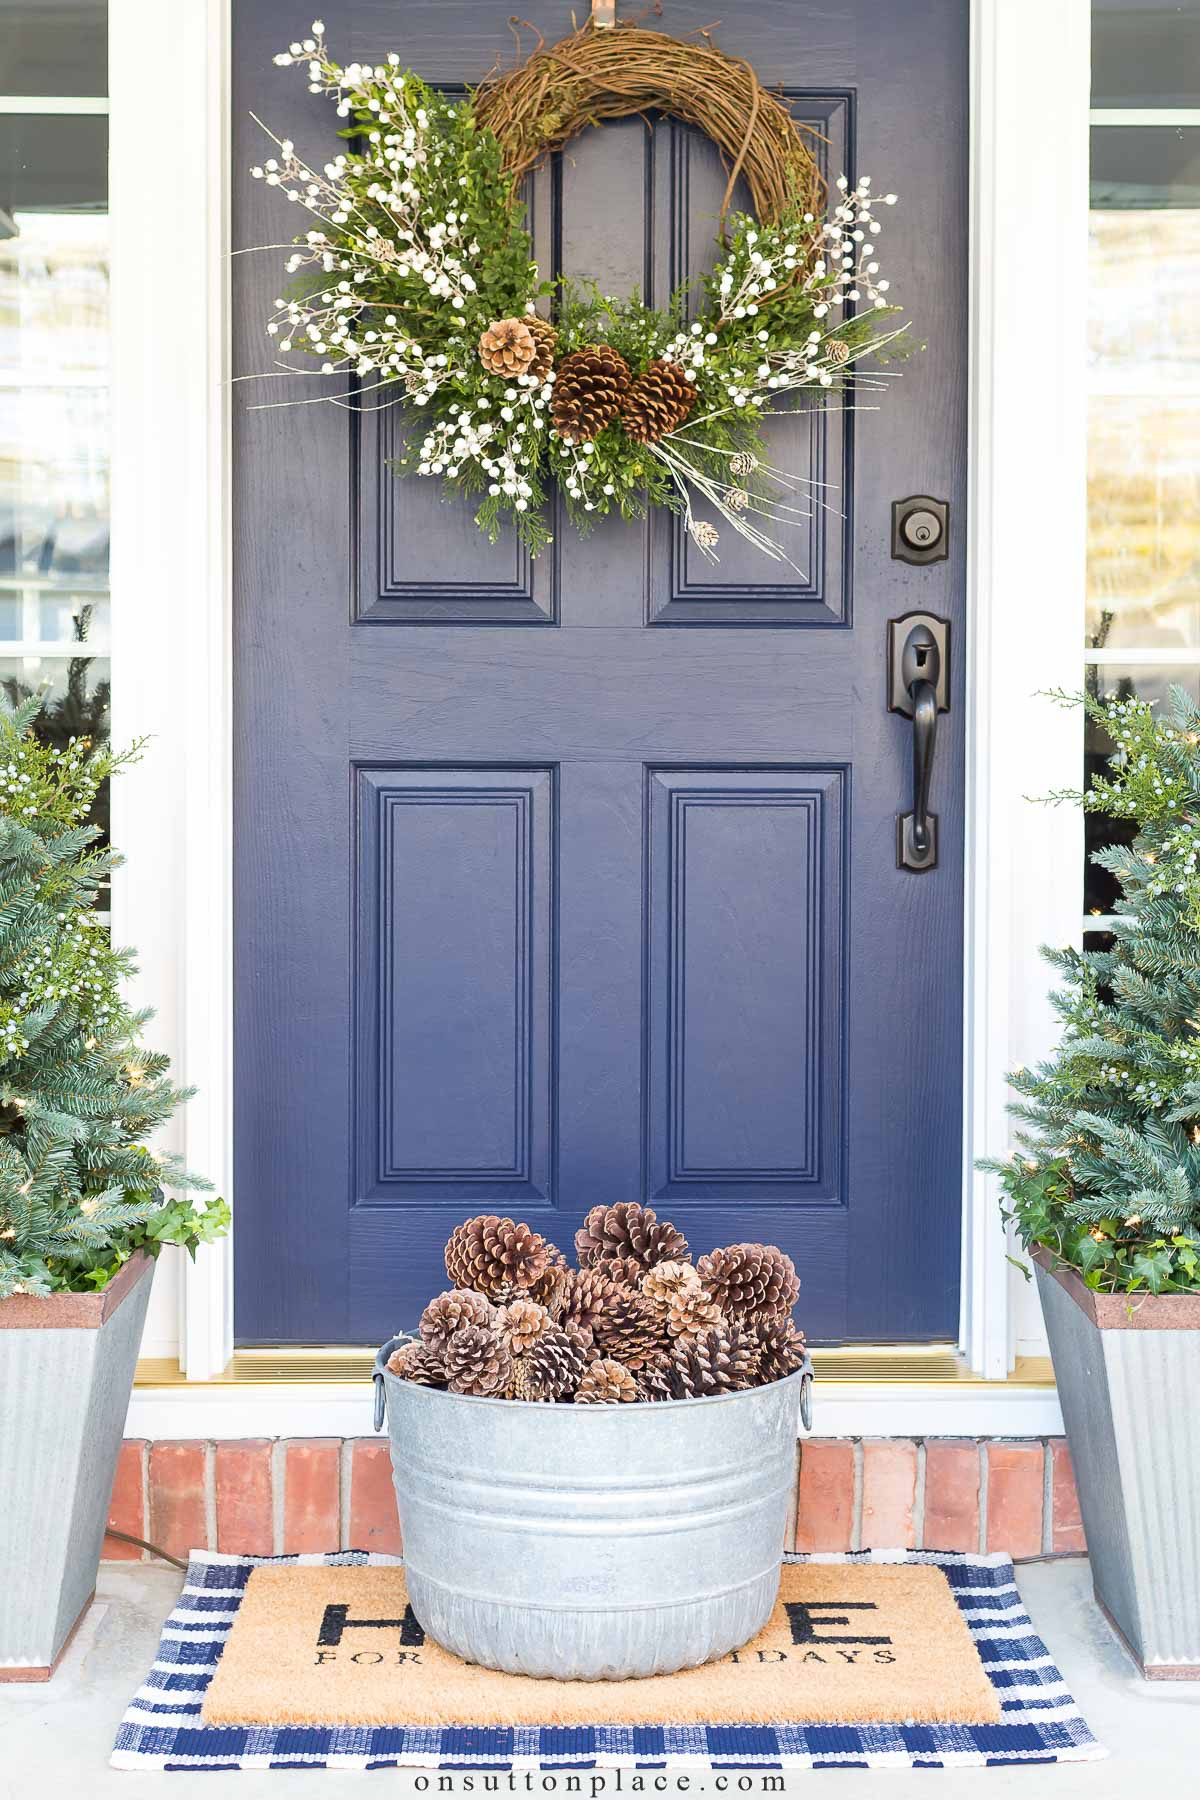 Fresh Boxwood Wreath For Window Or Door With White Bow, Farmhouse Wrea